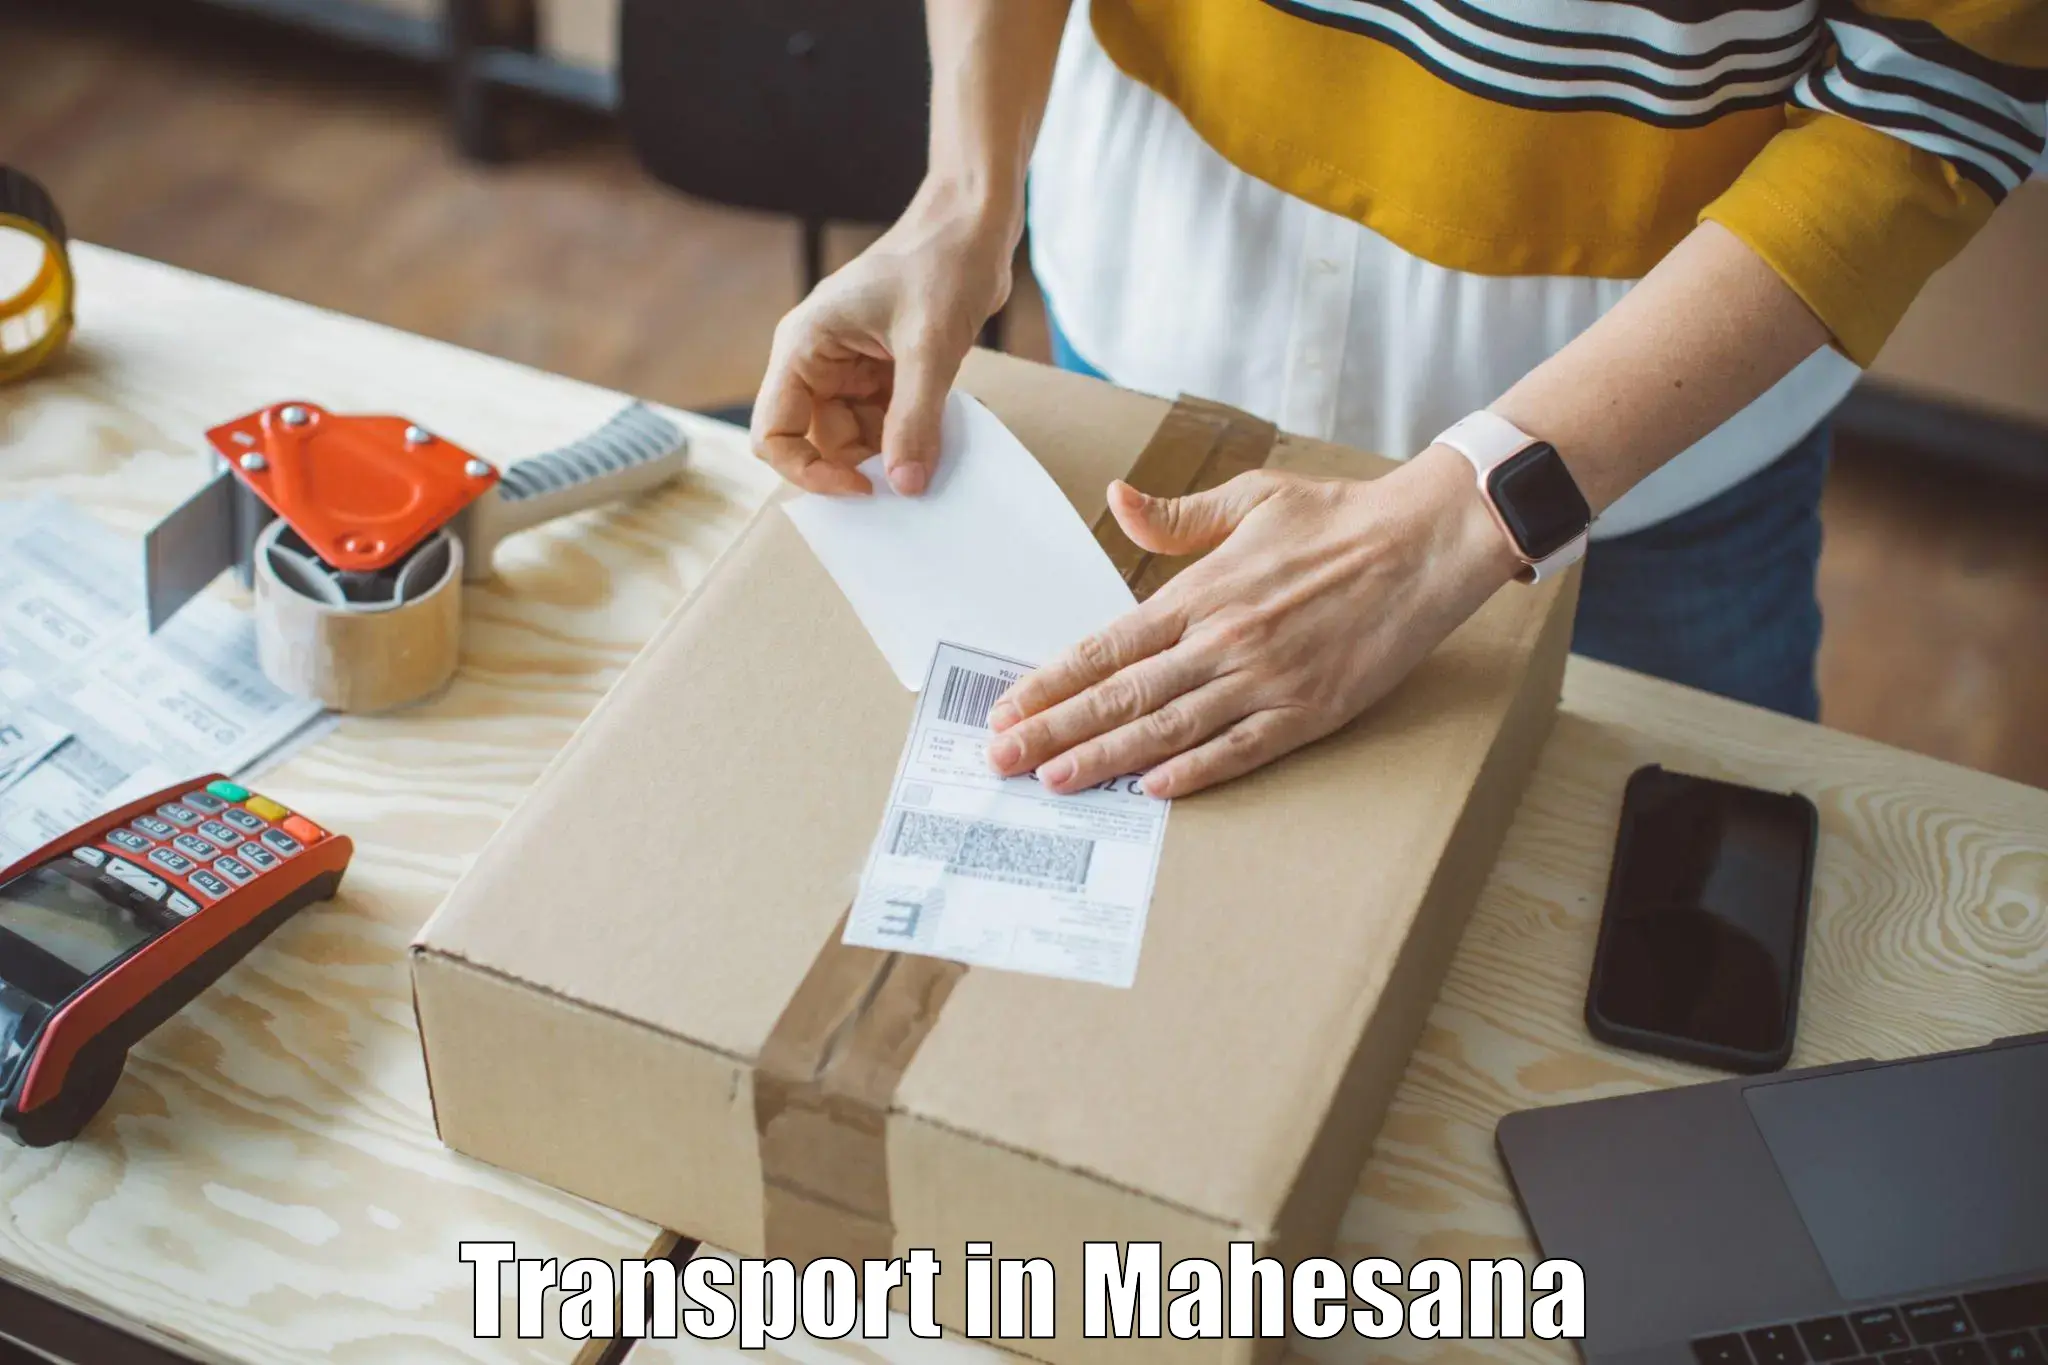 Commercial transport service in Mahesana